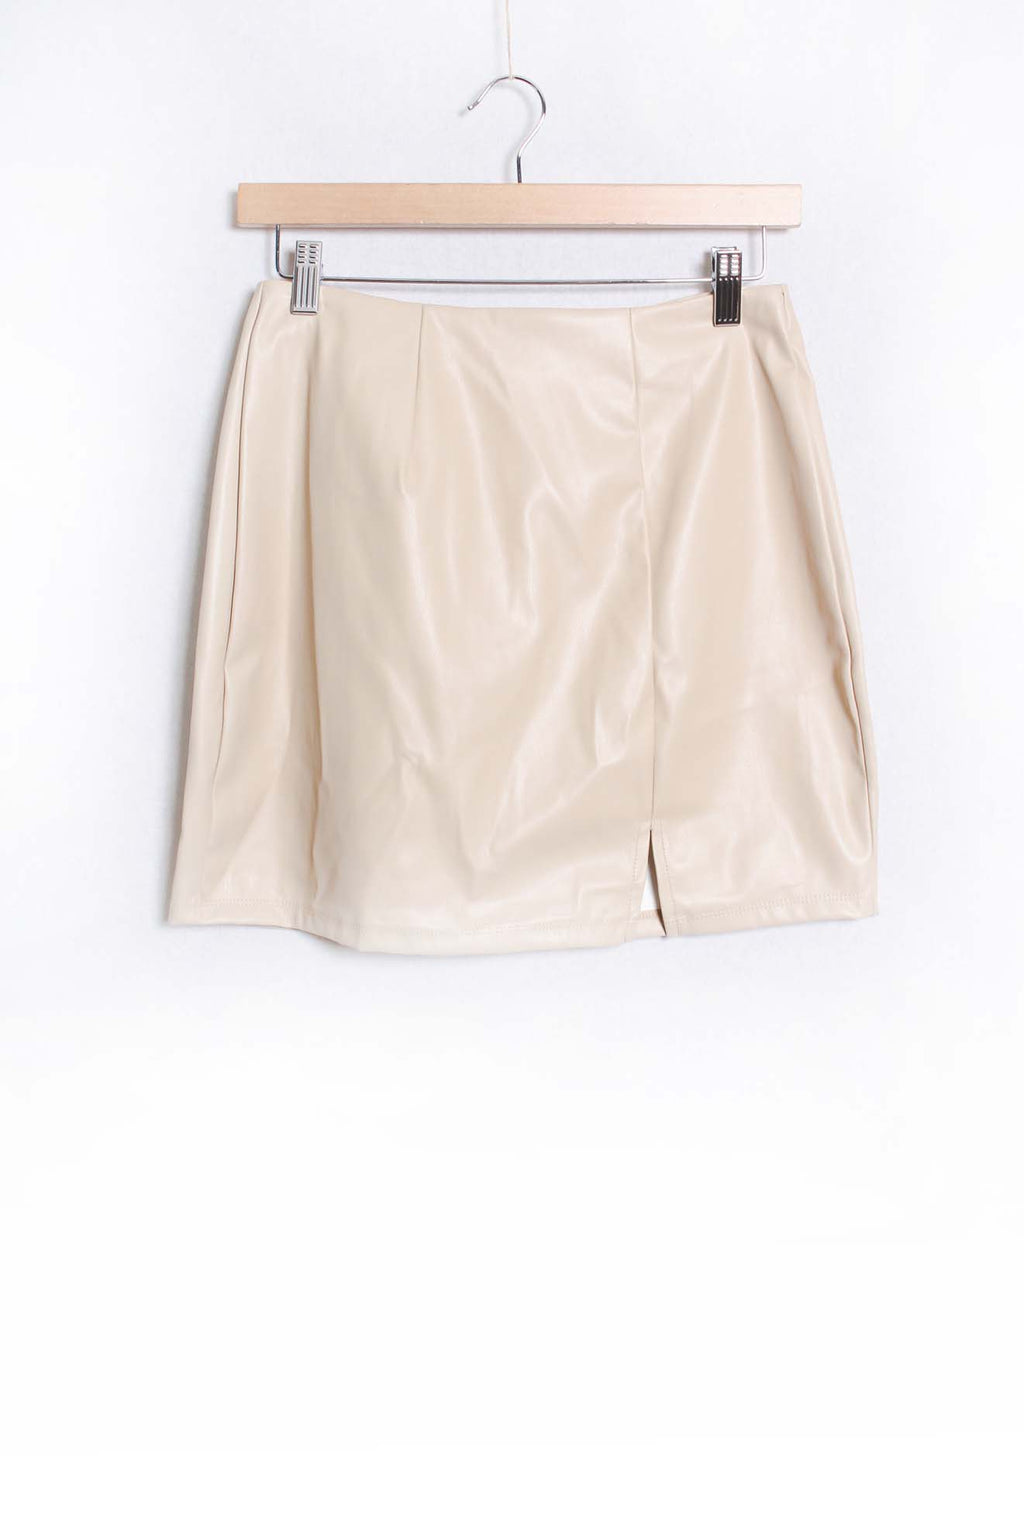 Women's High Waist Front Slit Faux Leather Mini Skirt